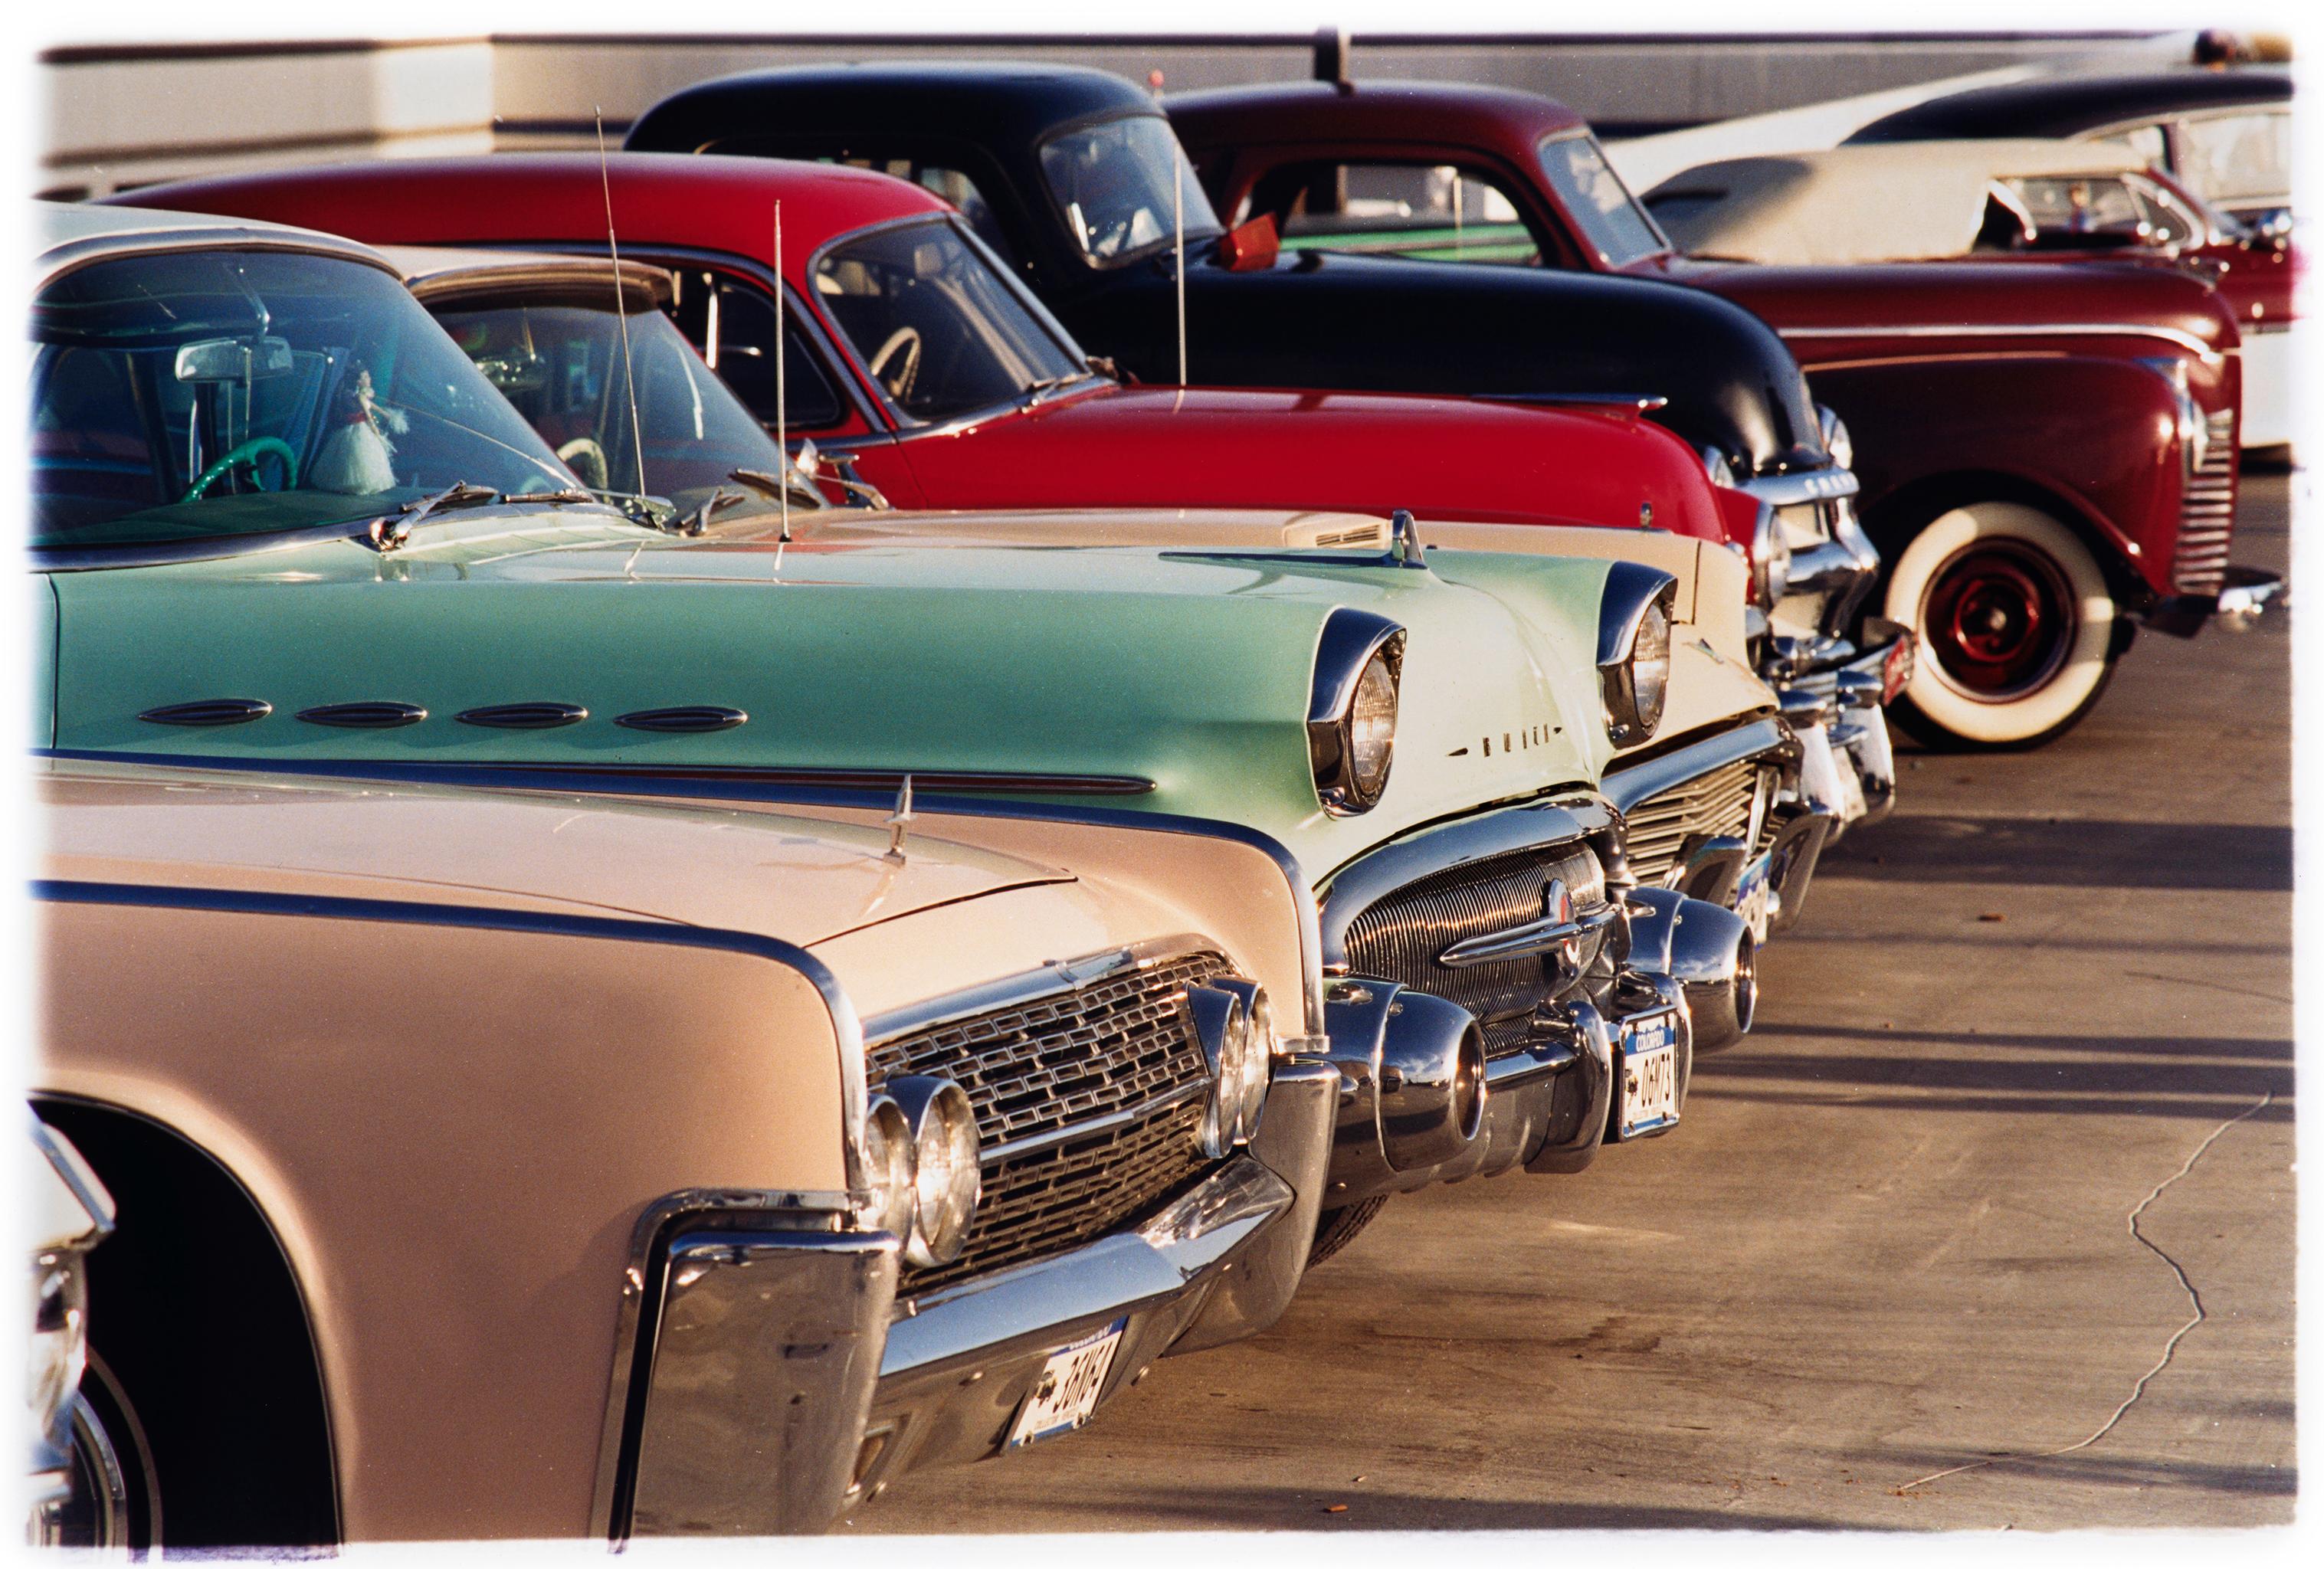 Richard Heeps Print - Cars, Las Vegas - American Color Photography